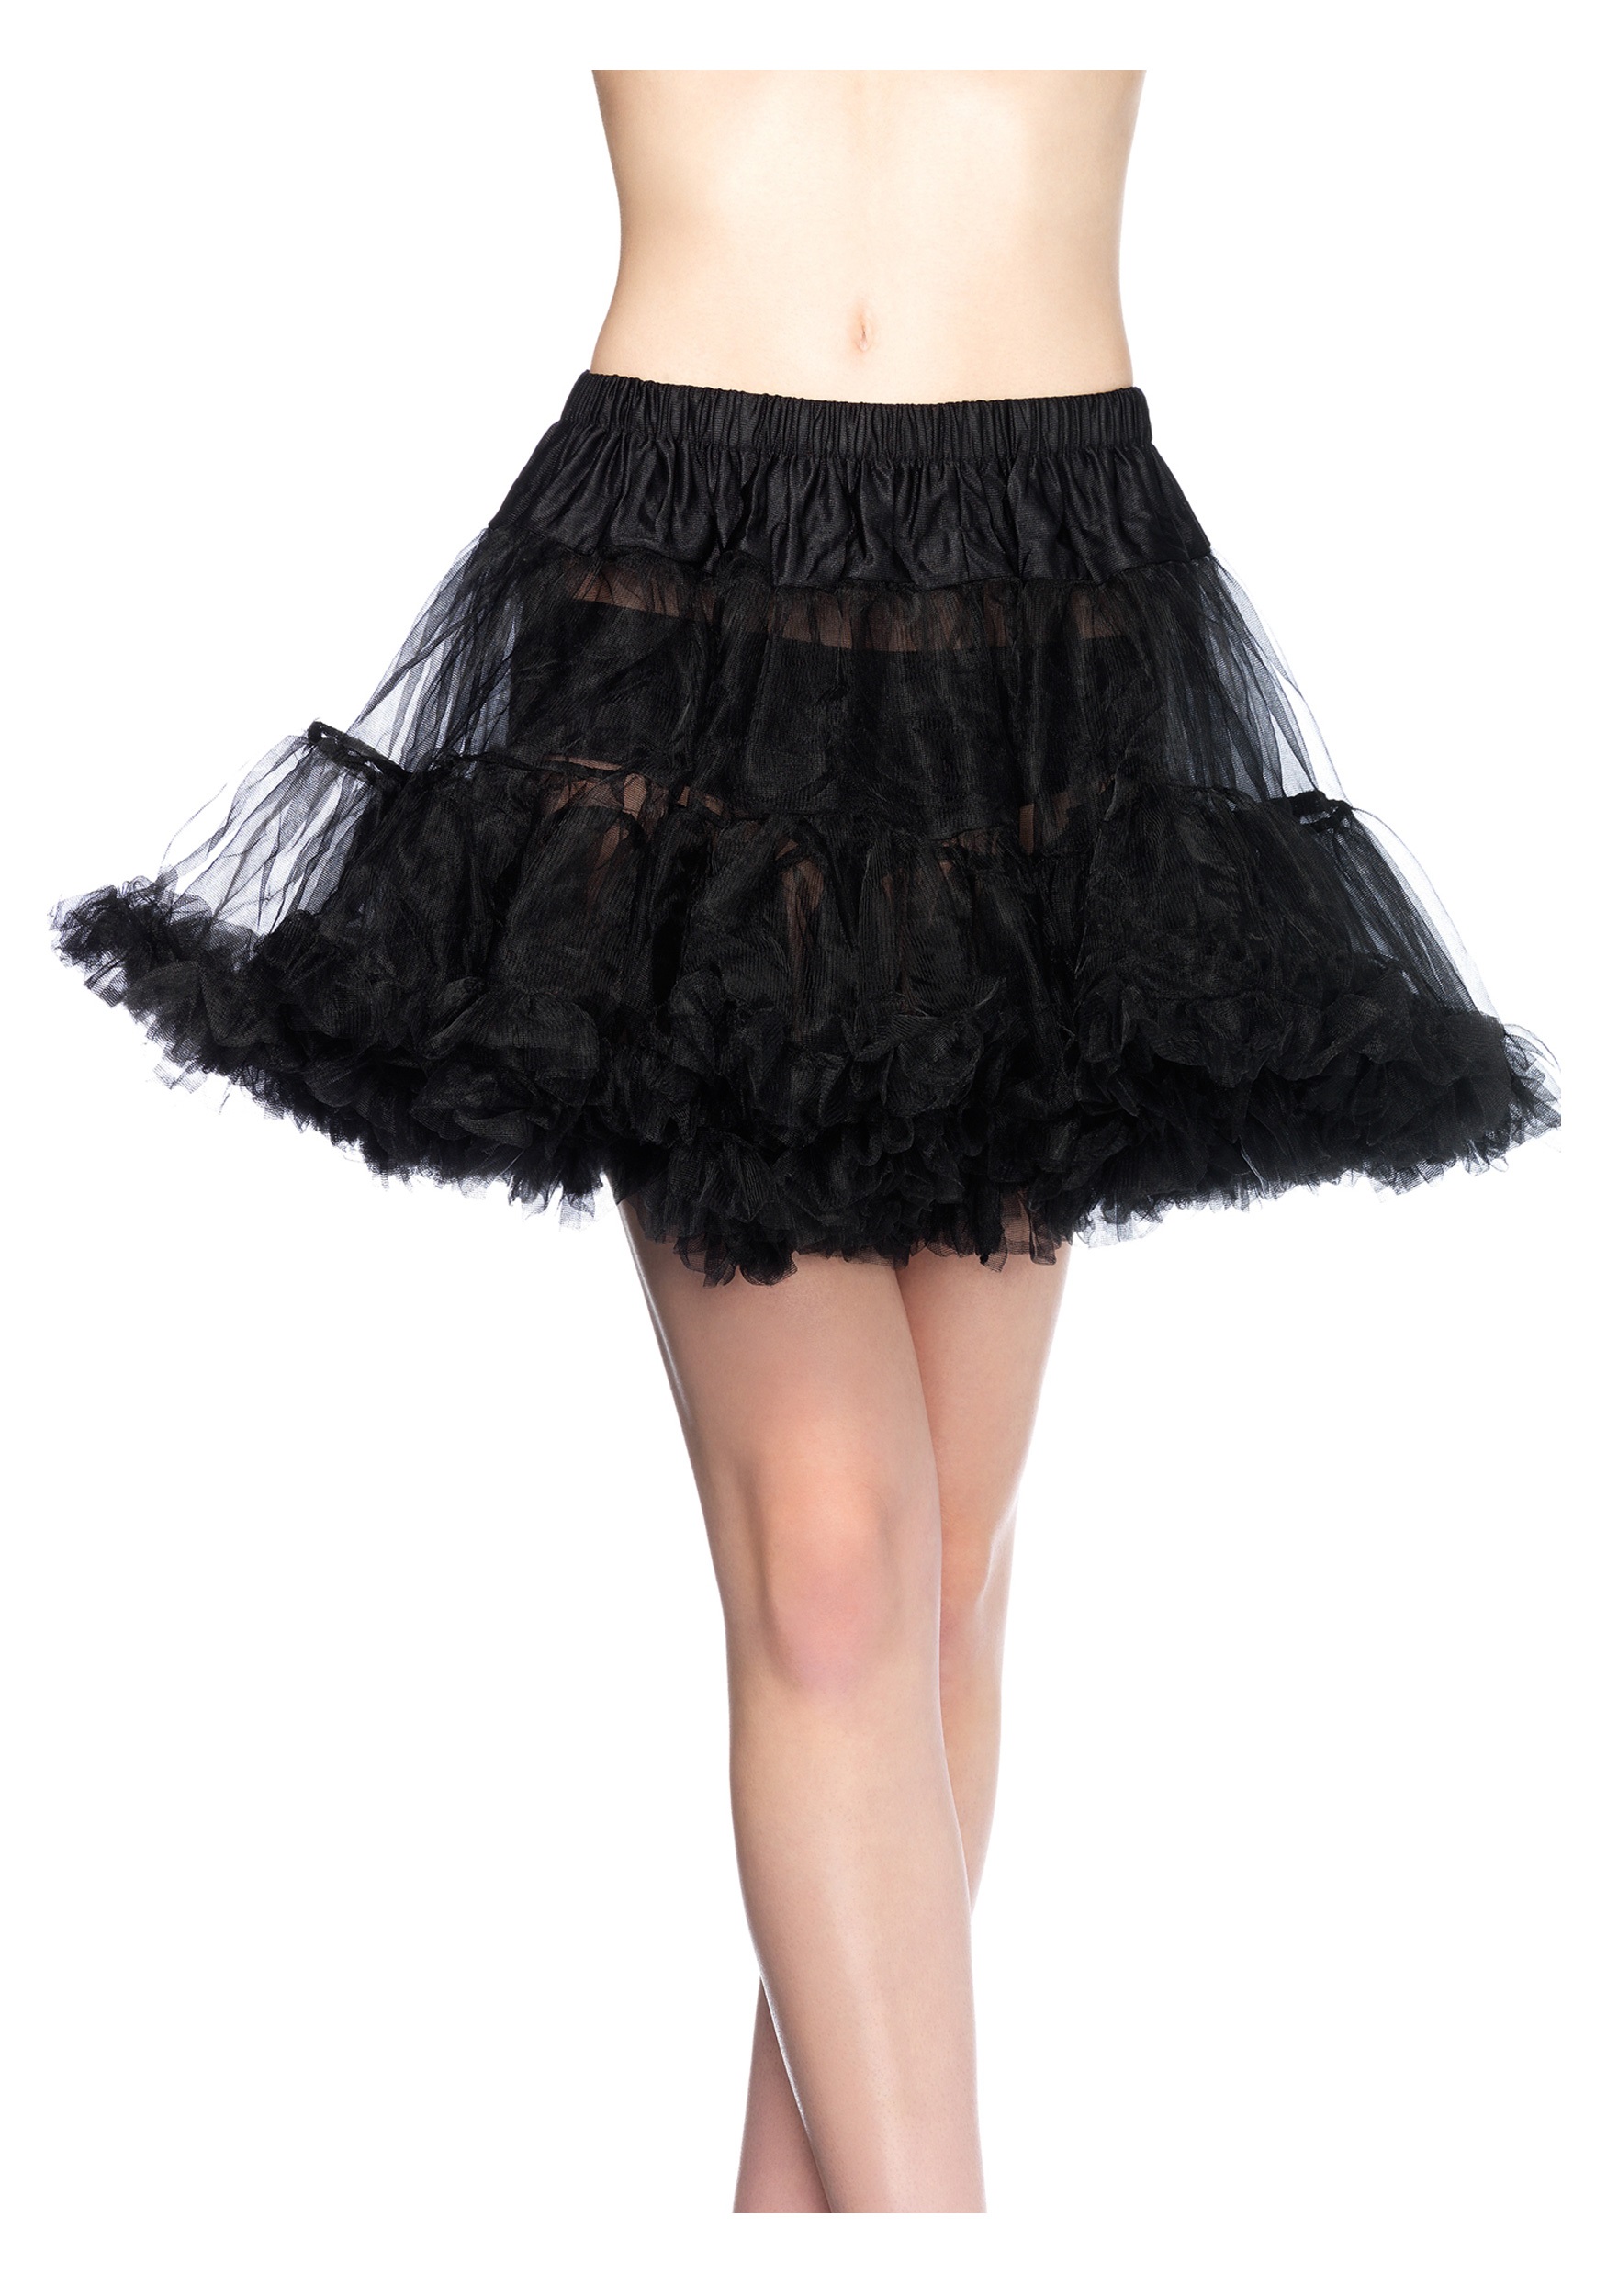 Plus Size Black Tulle Women's Petticoat